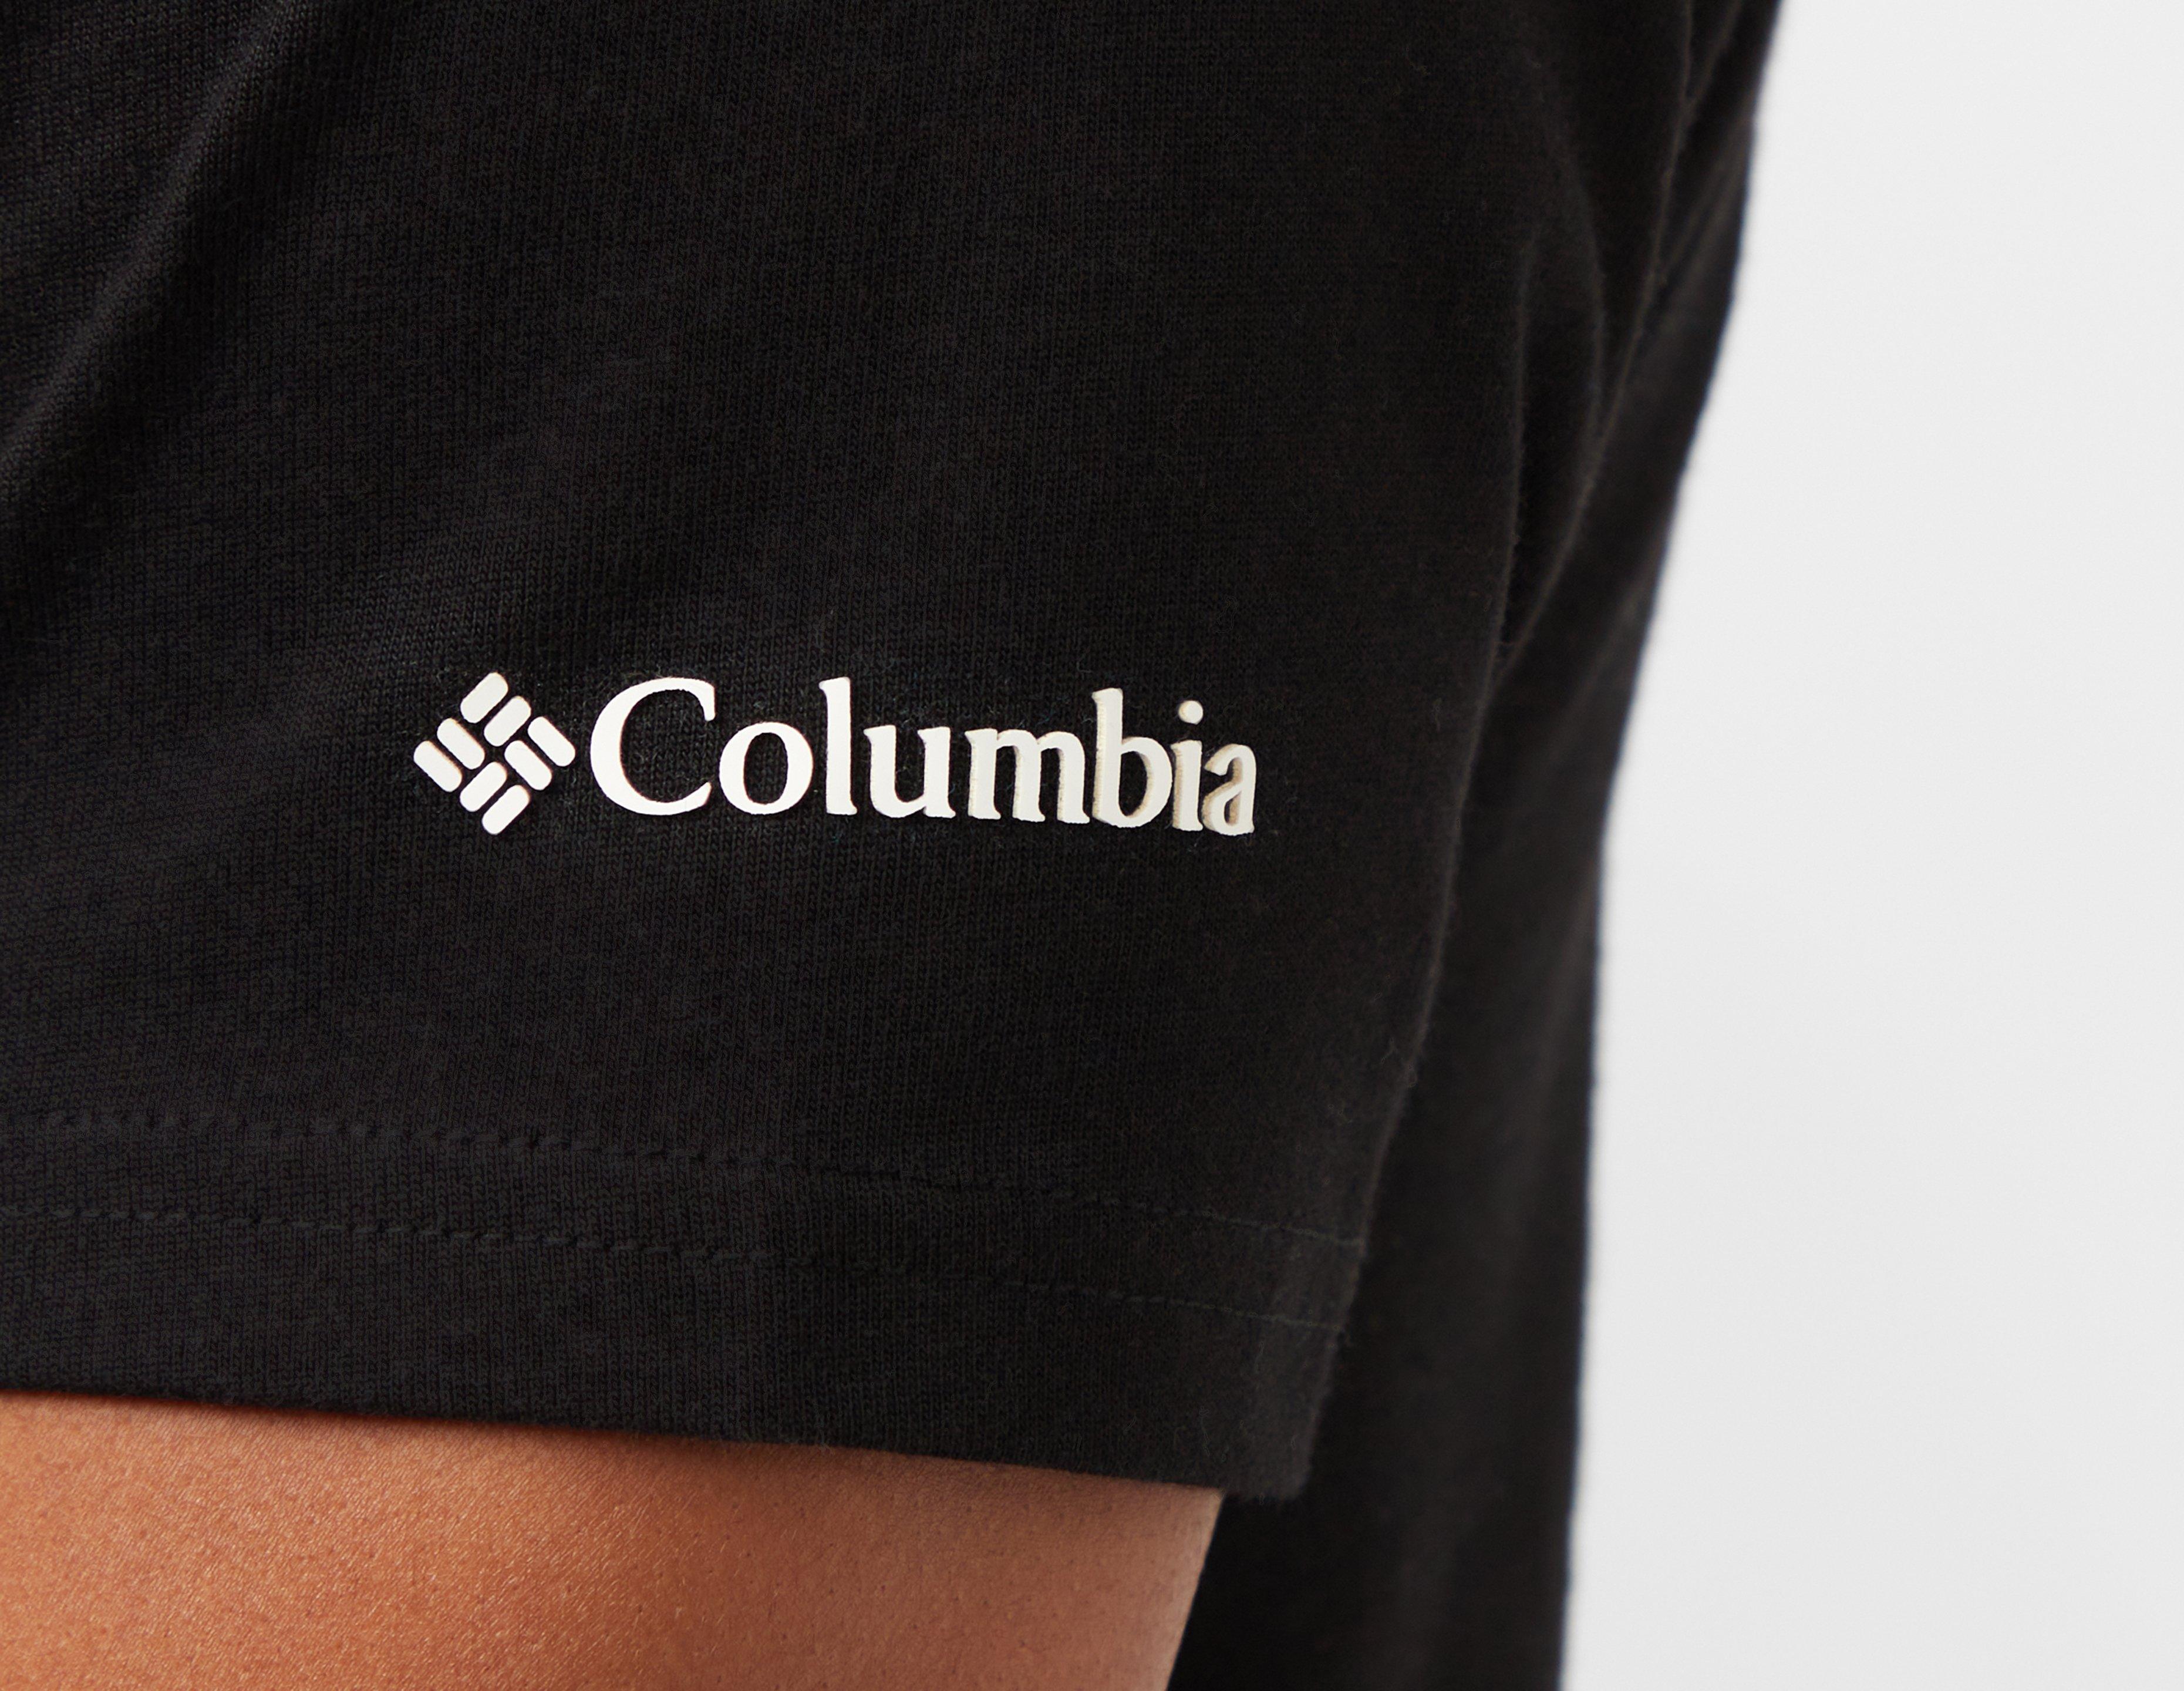 Shirt - ?exclusive - Healthdesign? | rue madame sweatshirt - Black Columbia  Apres T